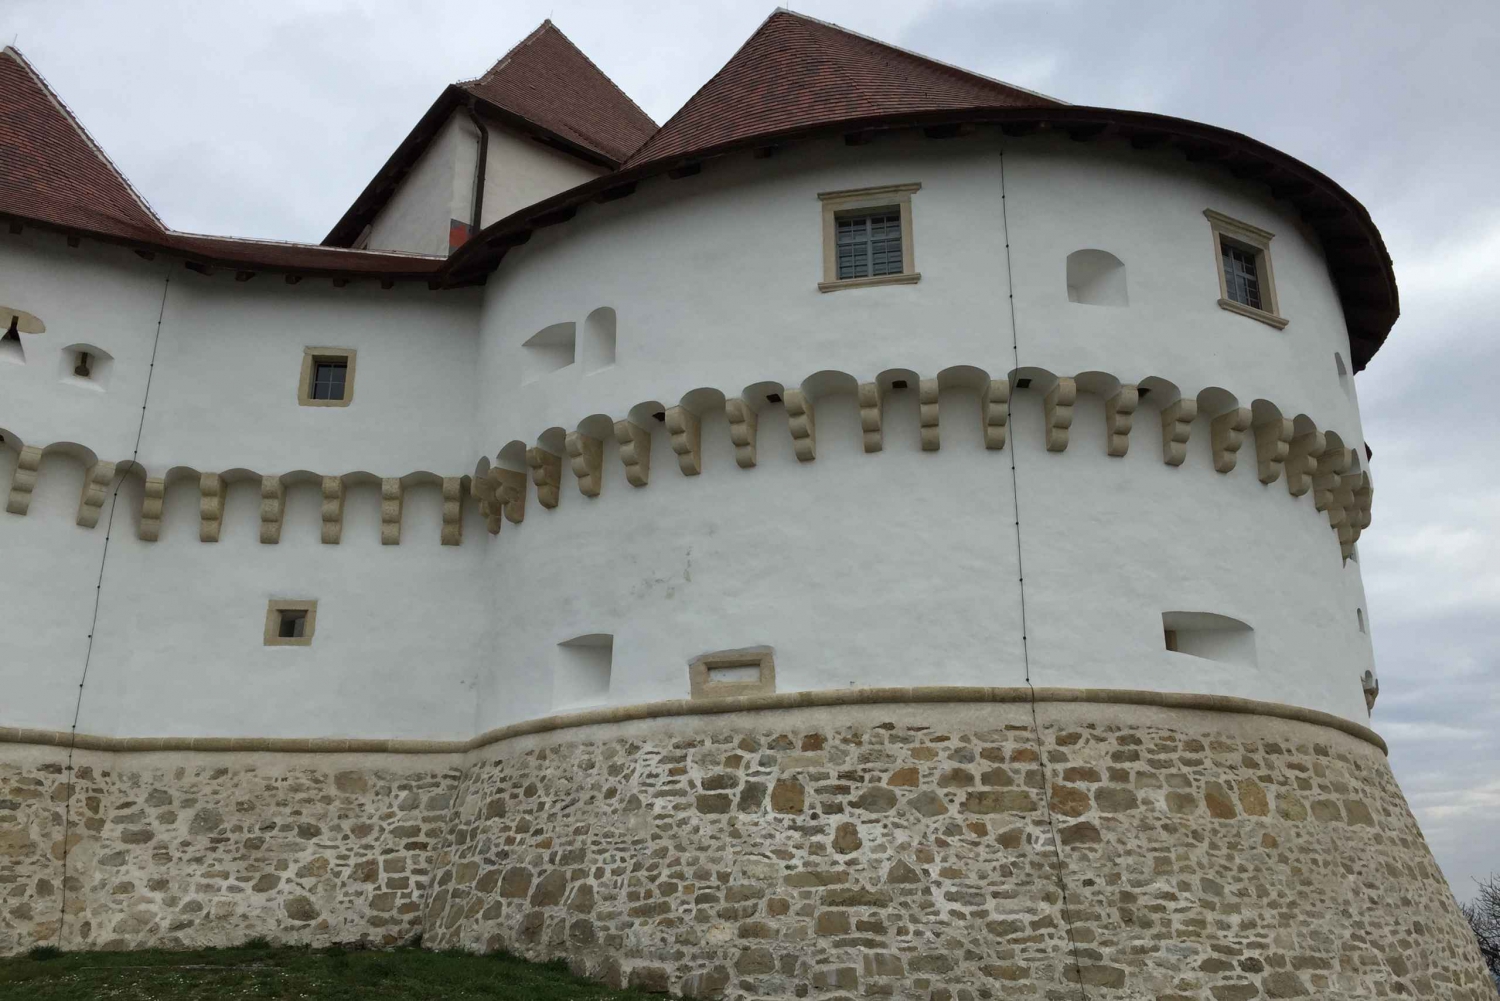 Veliki Tabor Castle and Swimming Pool Complex Tuhelj